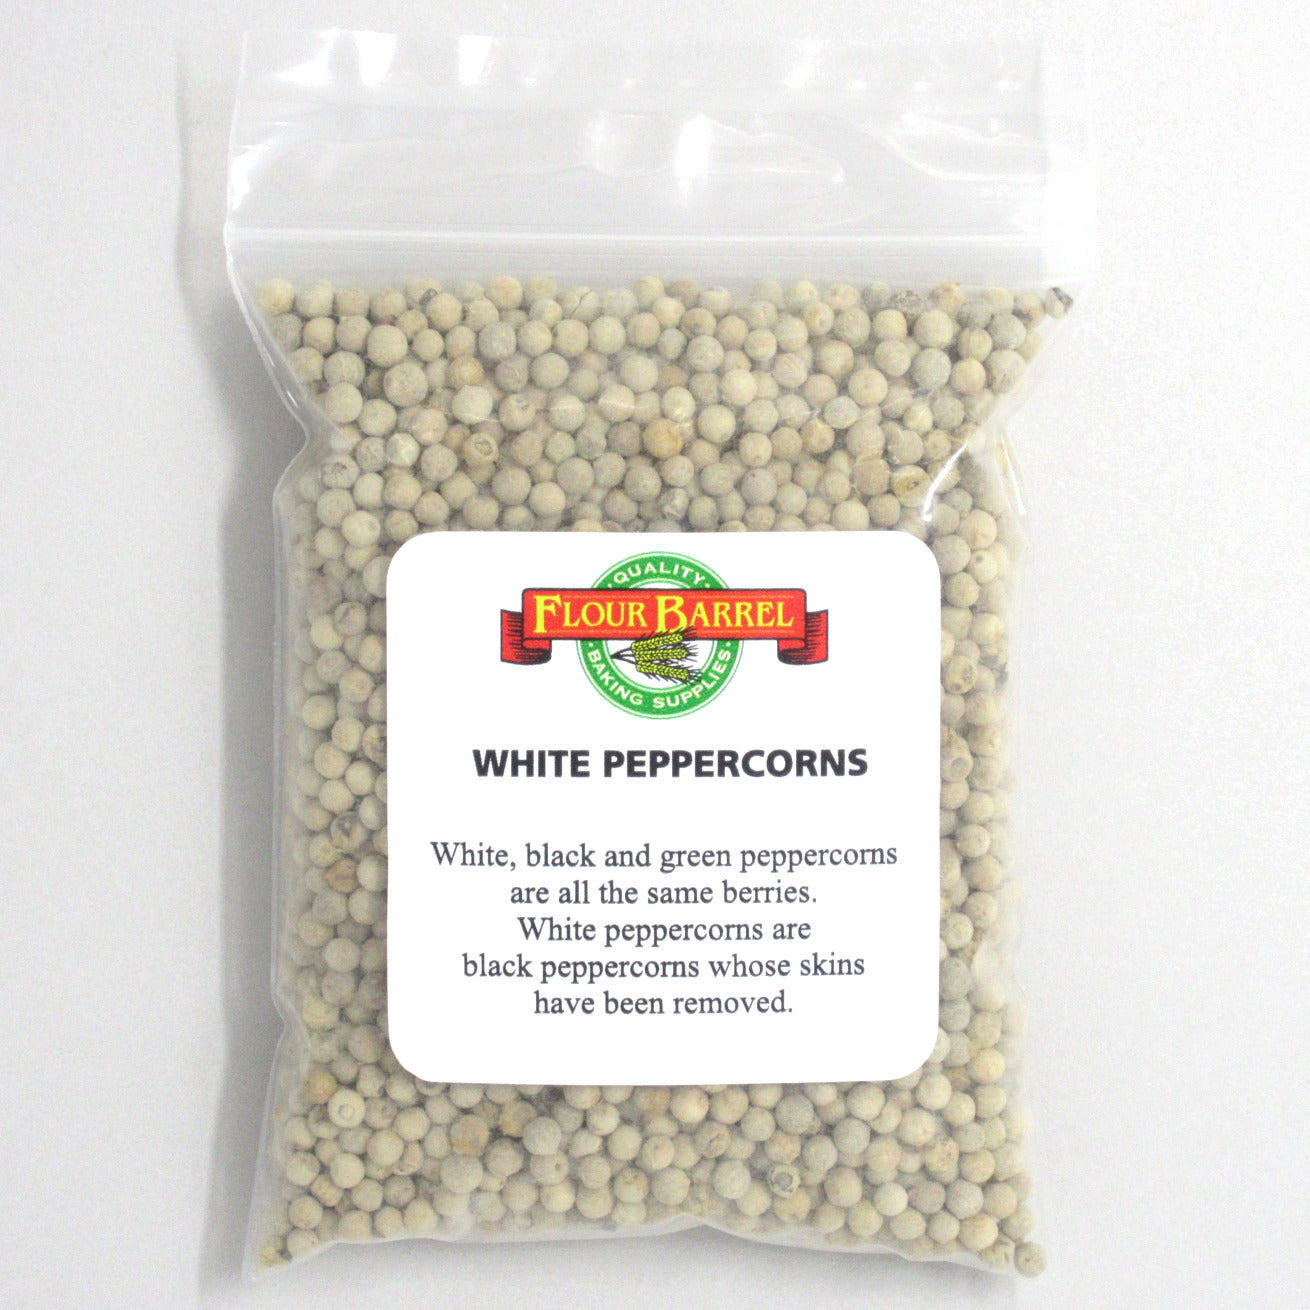 Flour Barrel product image - White Peppercorns